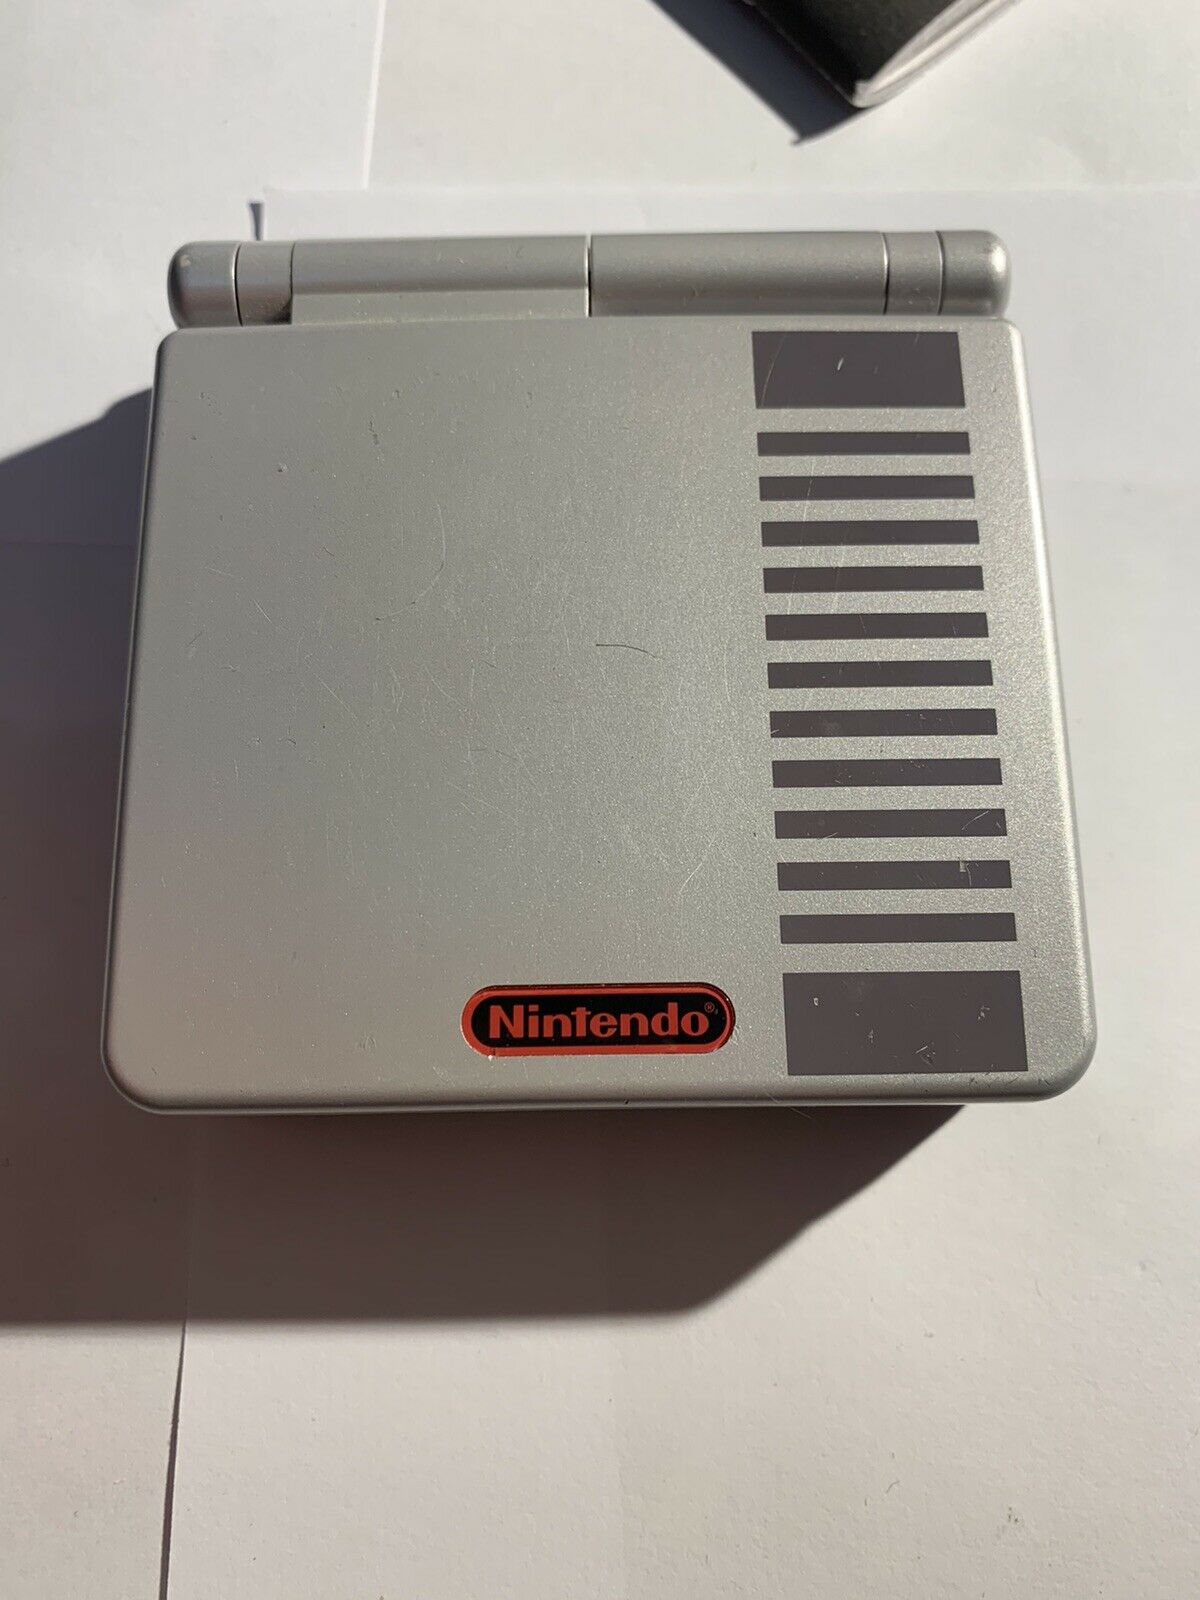 Game Boy Advance SP Classic NES